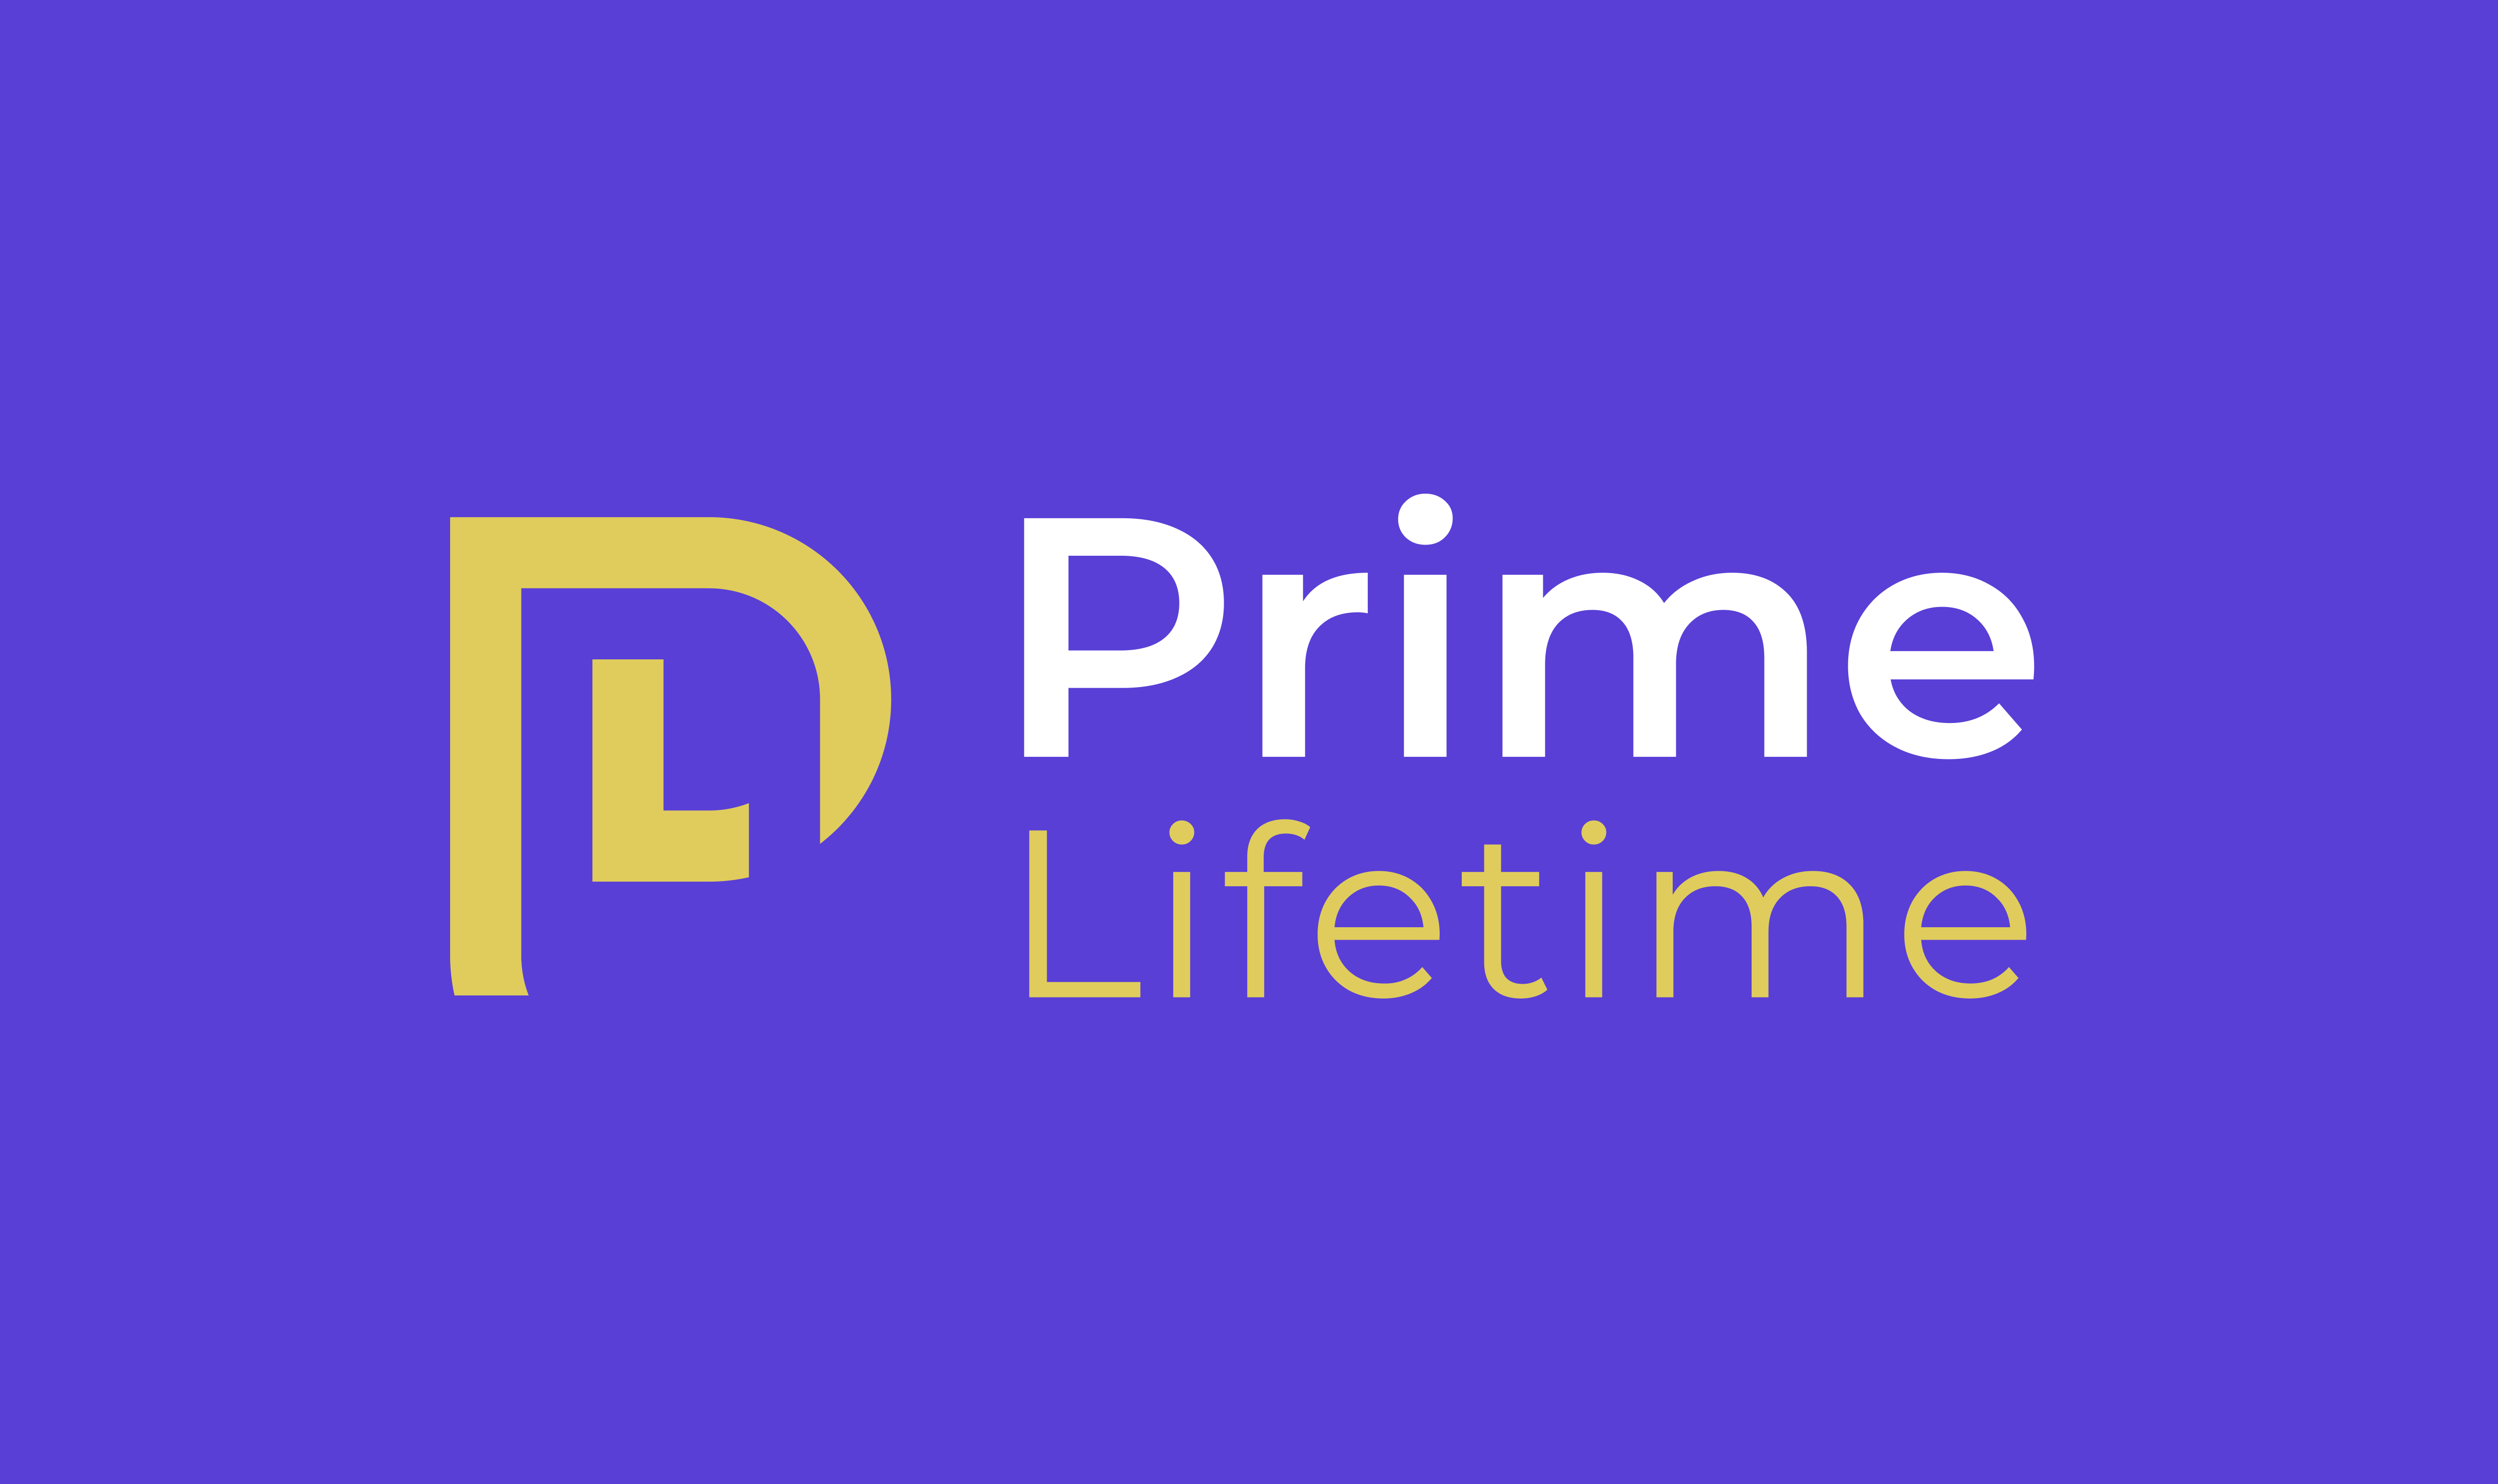 Prime Lifetime - Prime Later Life Logo